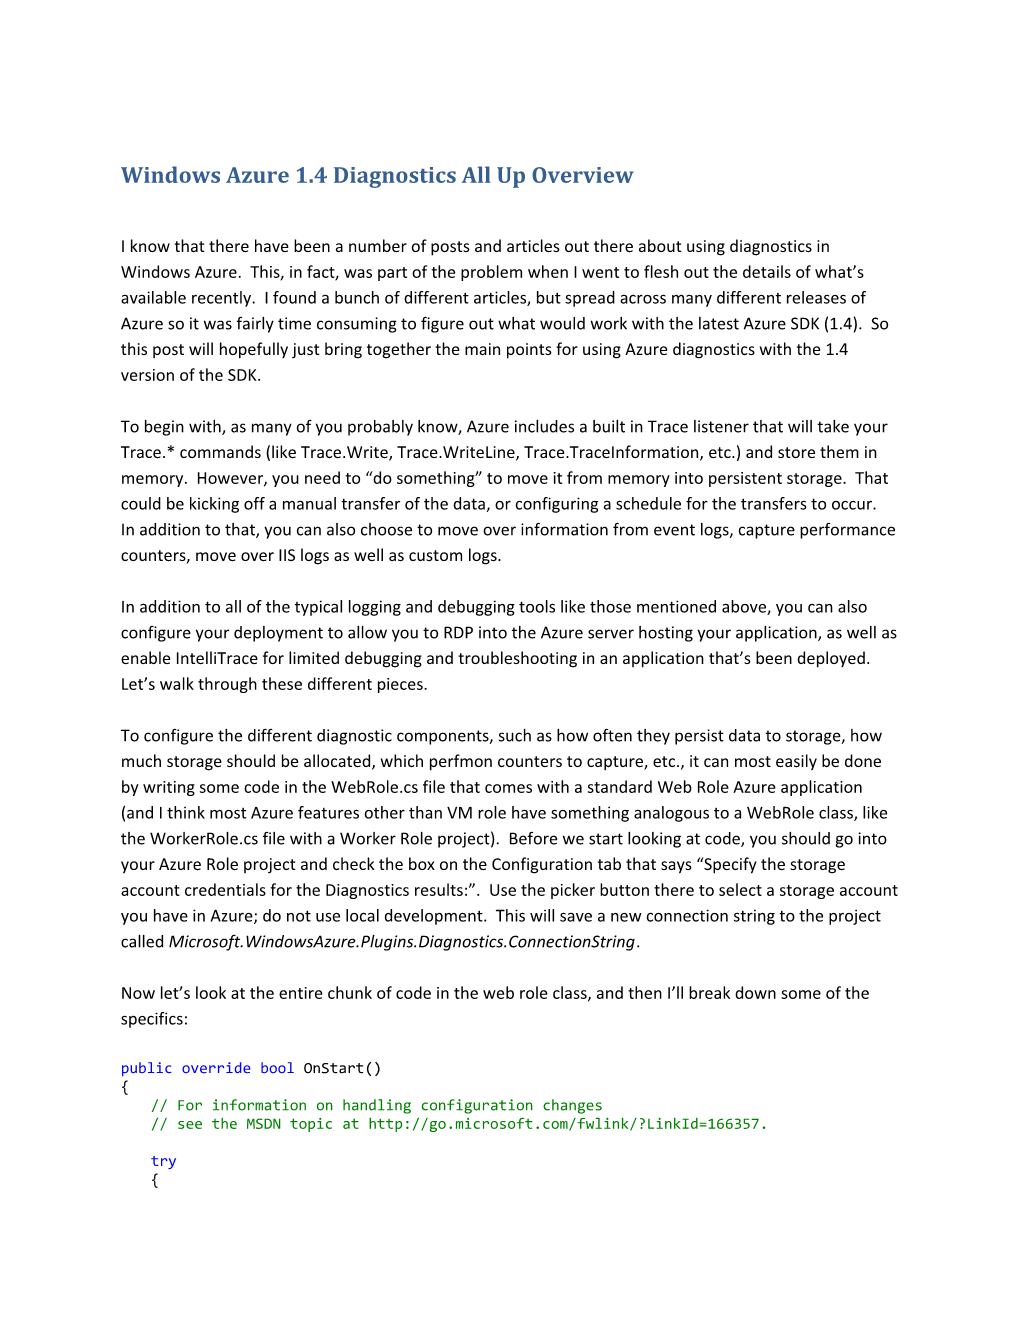 Windows Azure 1.4 Diagnostics All up Overview